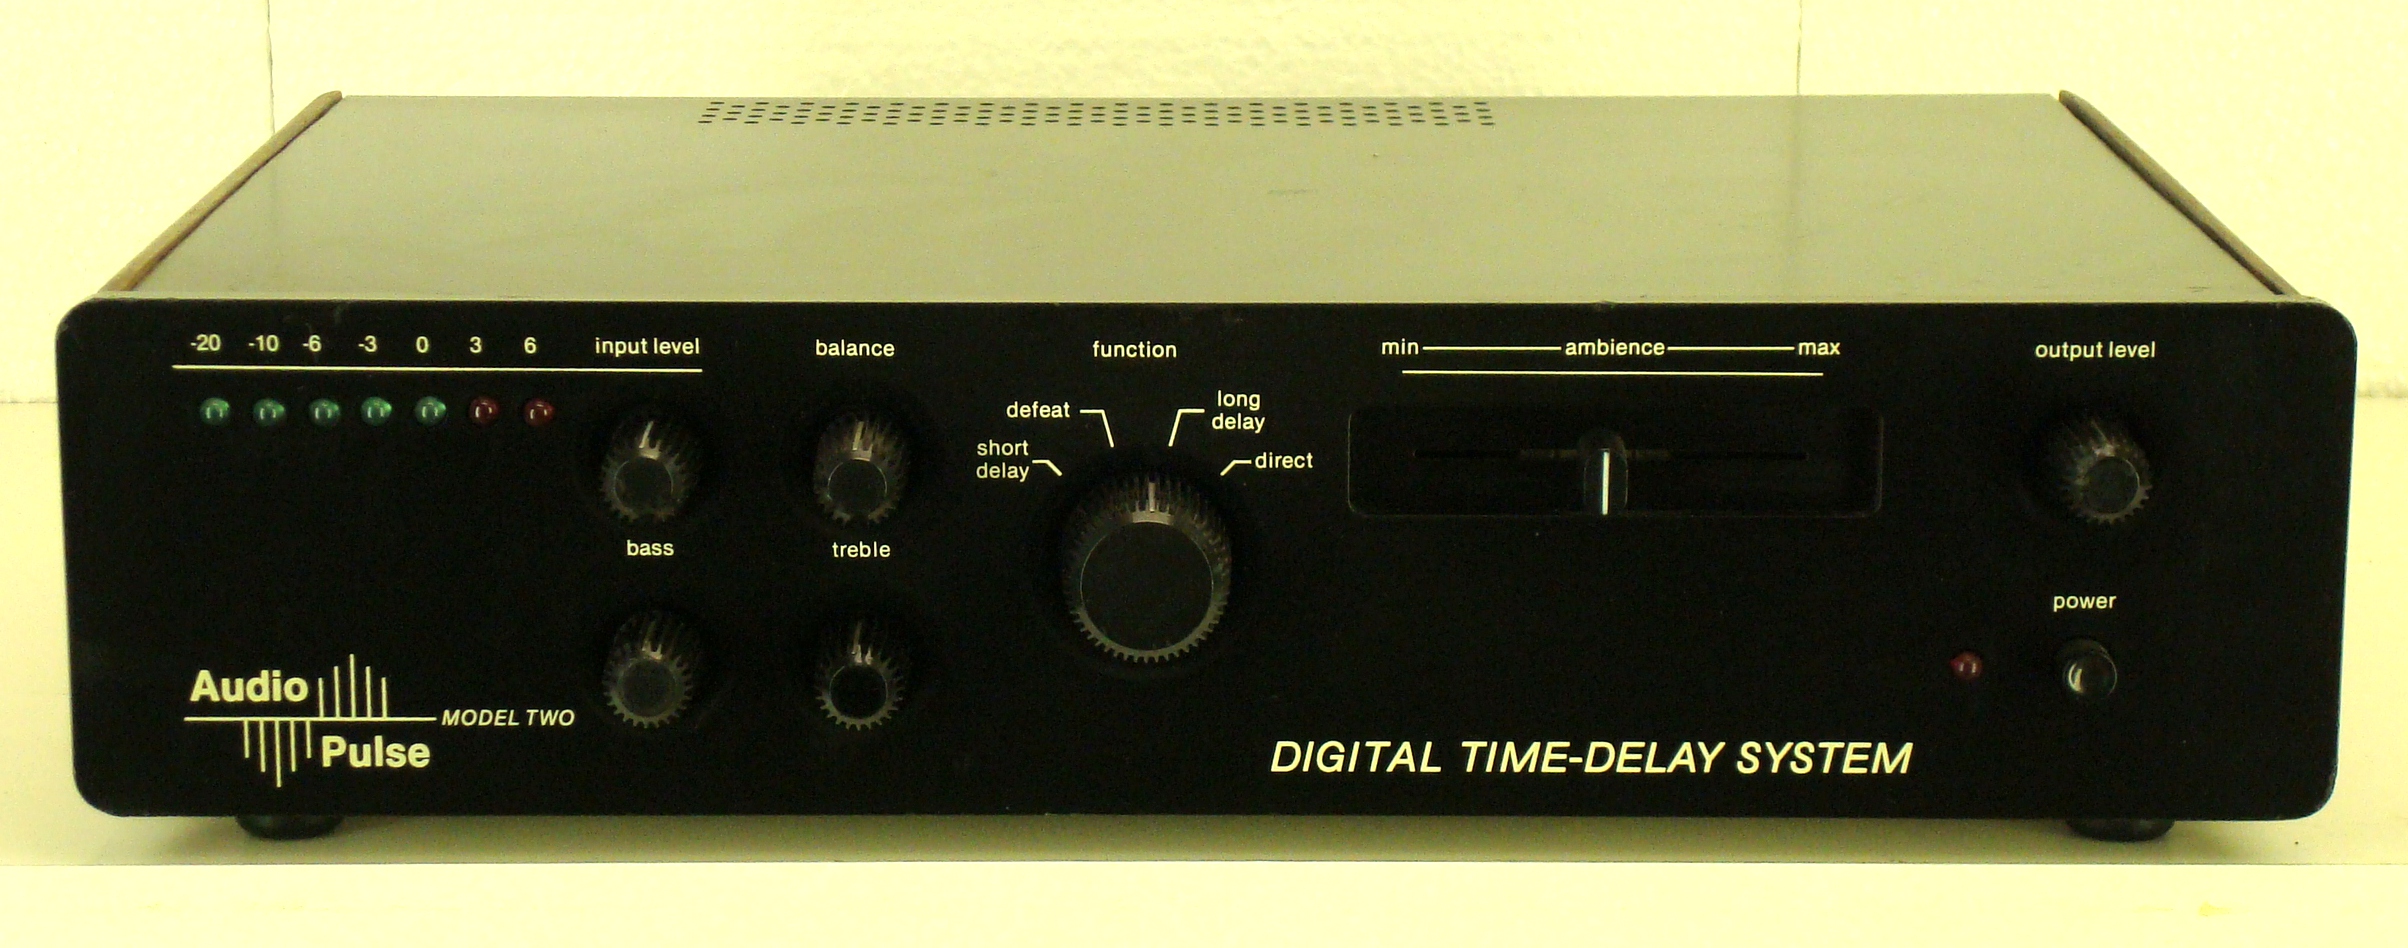 Audio Pulse Model 2 Digital Time Delay System